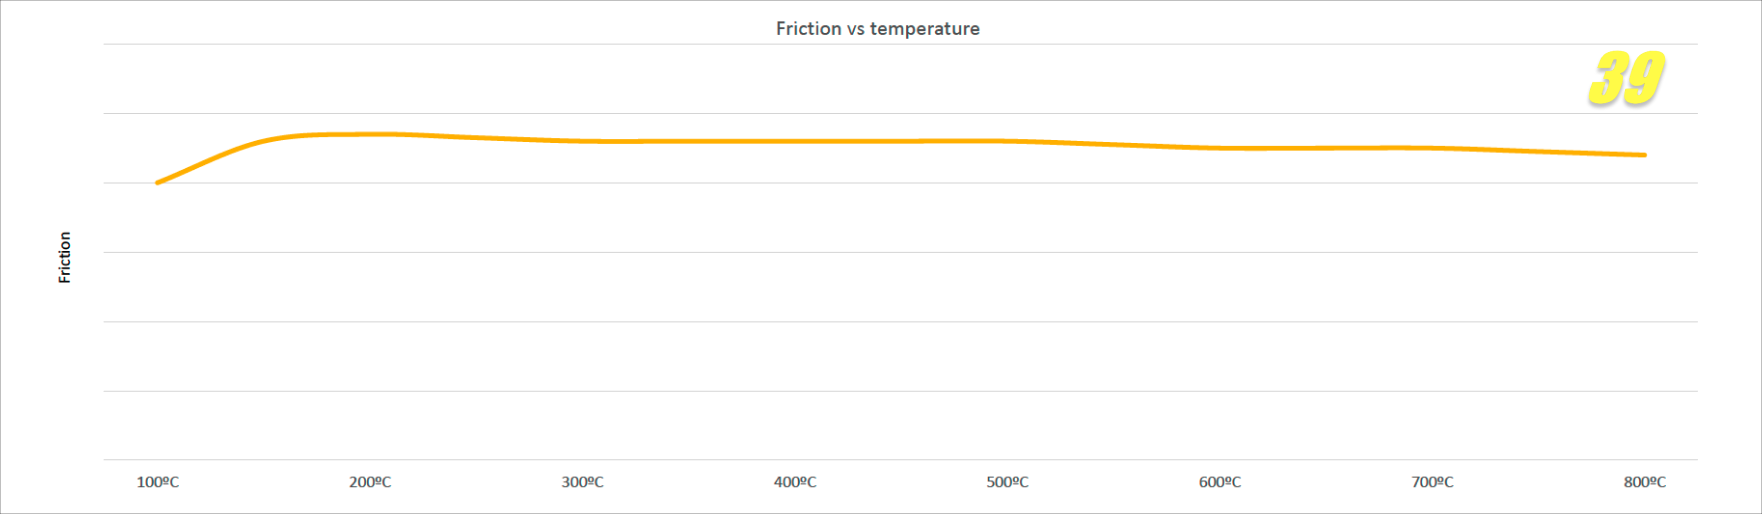 PFC 39 Compound Friction Vs Temperature